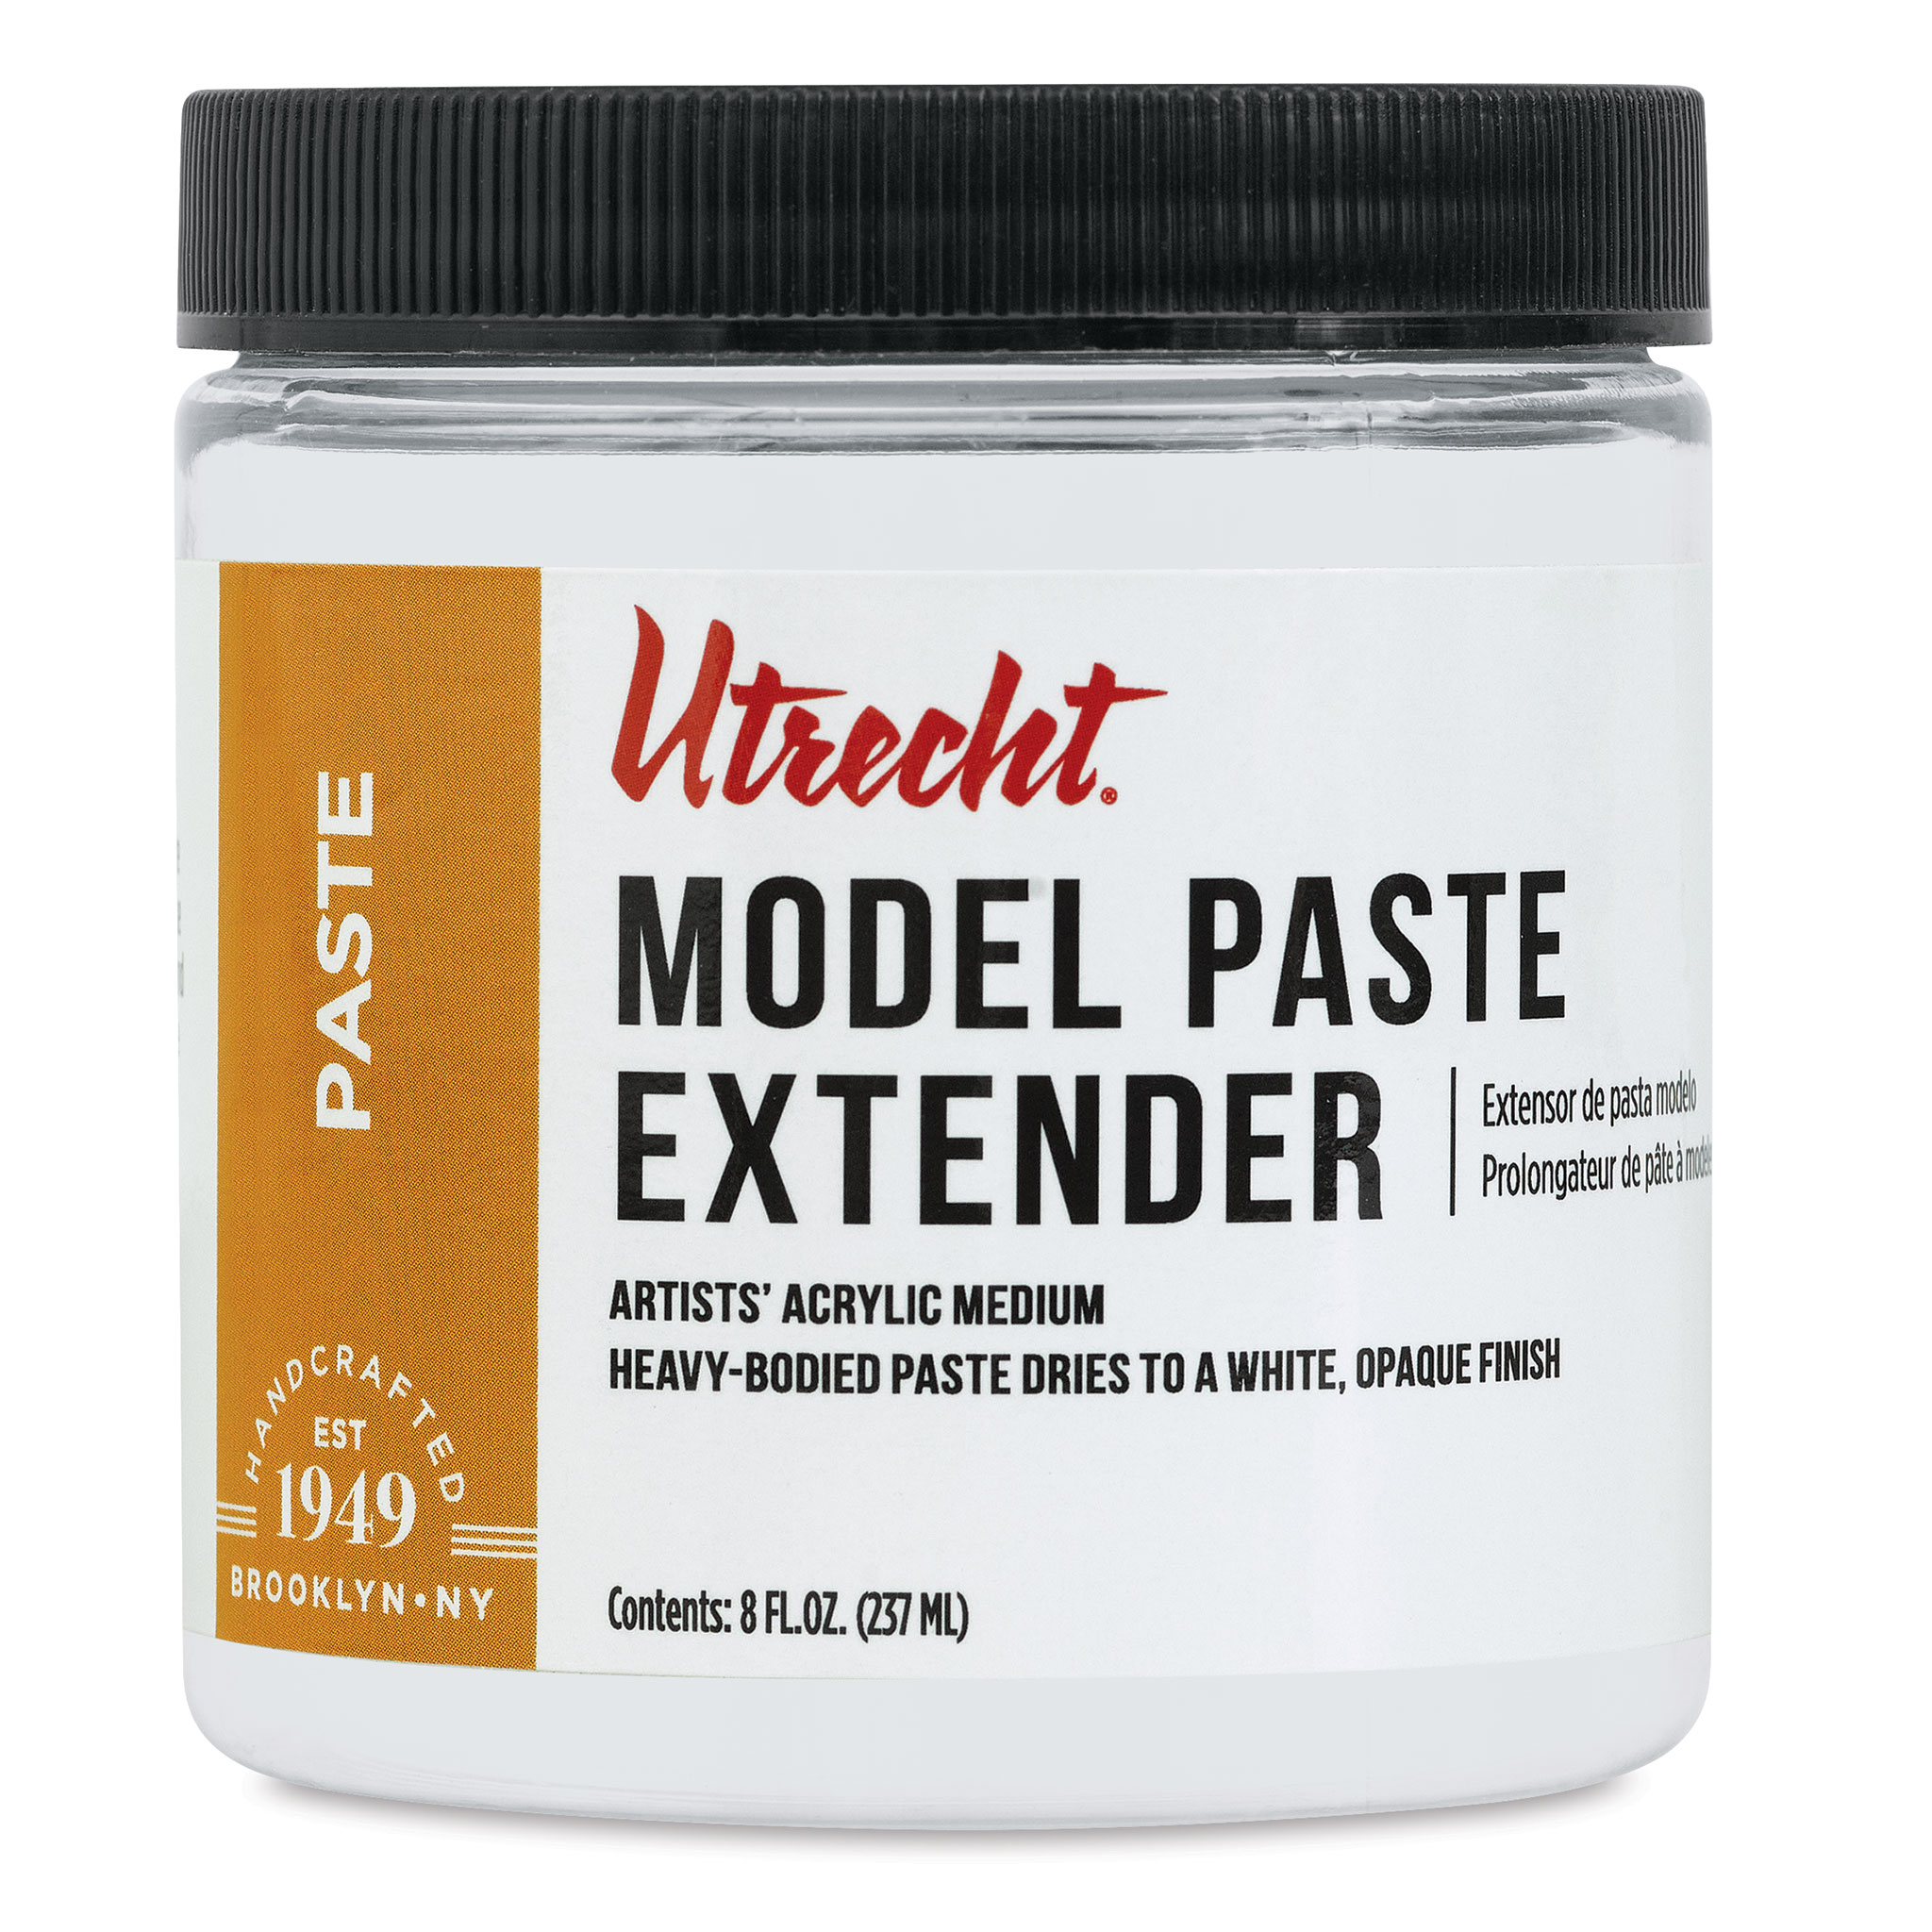 Utrecht Acrylic Medium - Modeling Paste Extender, Pint